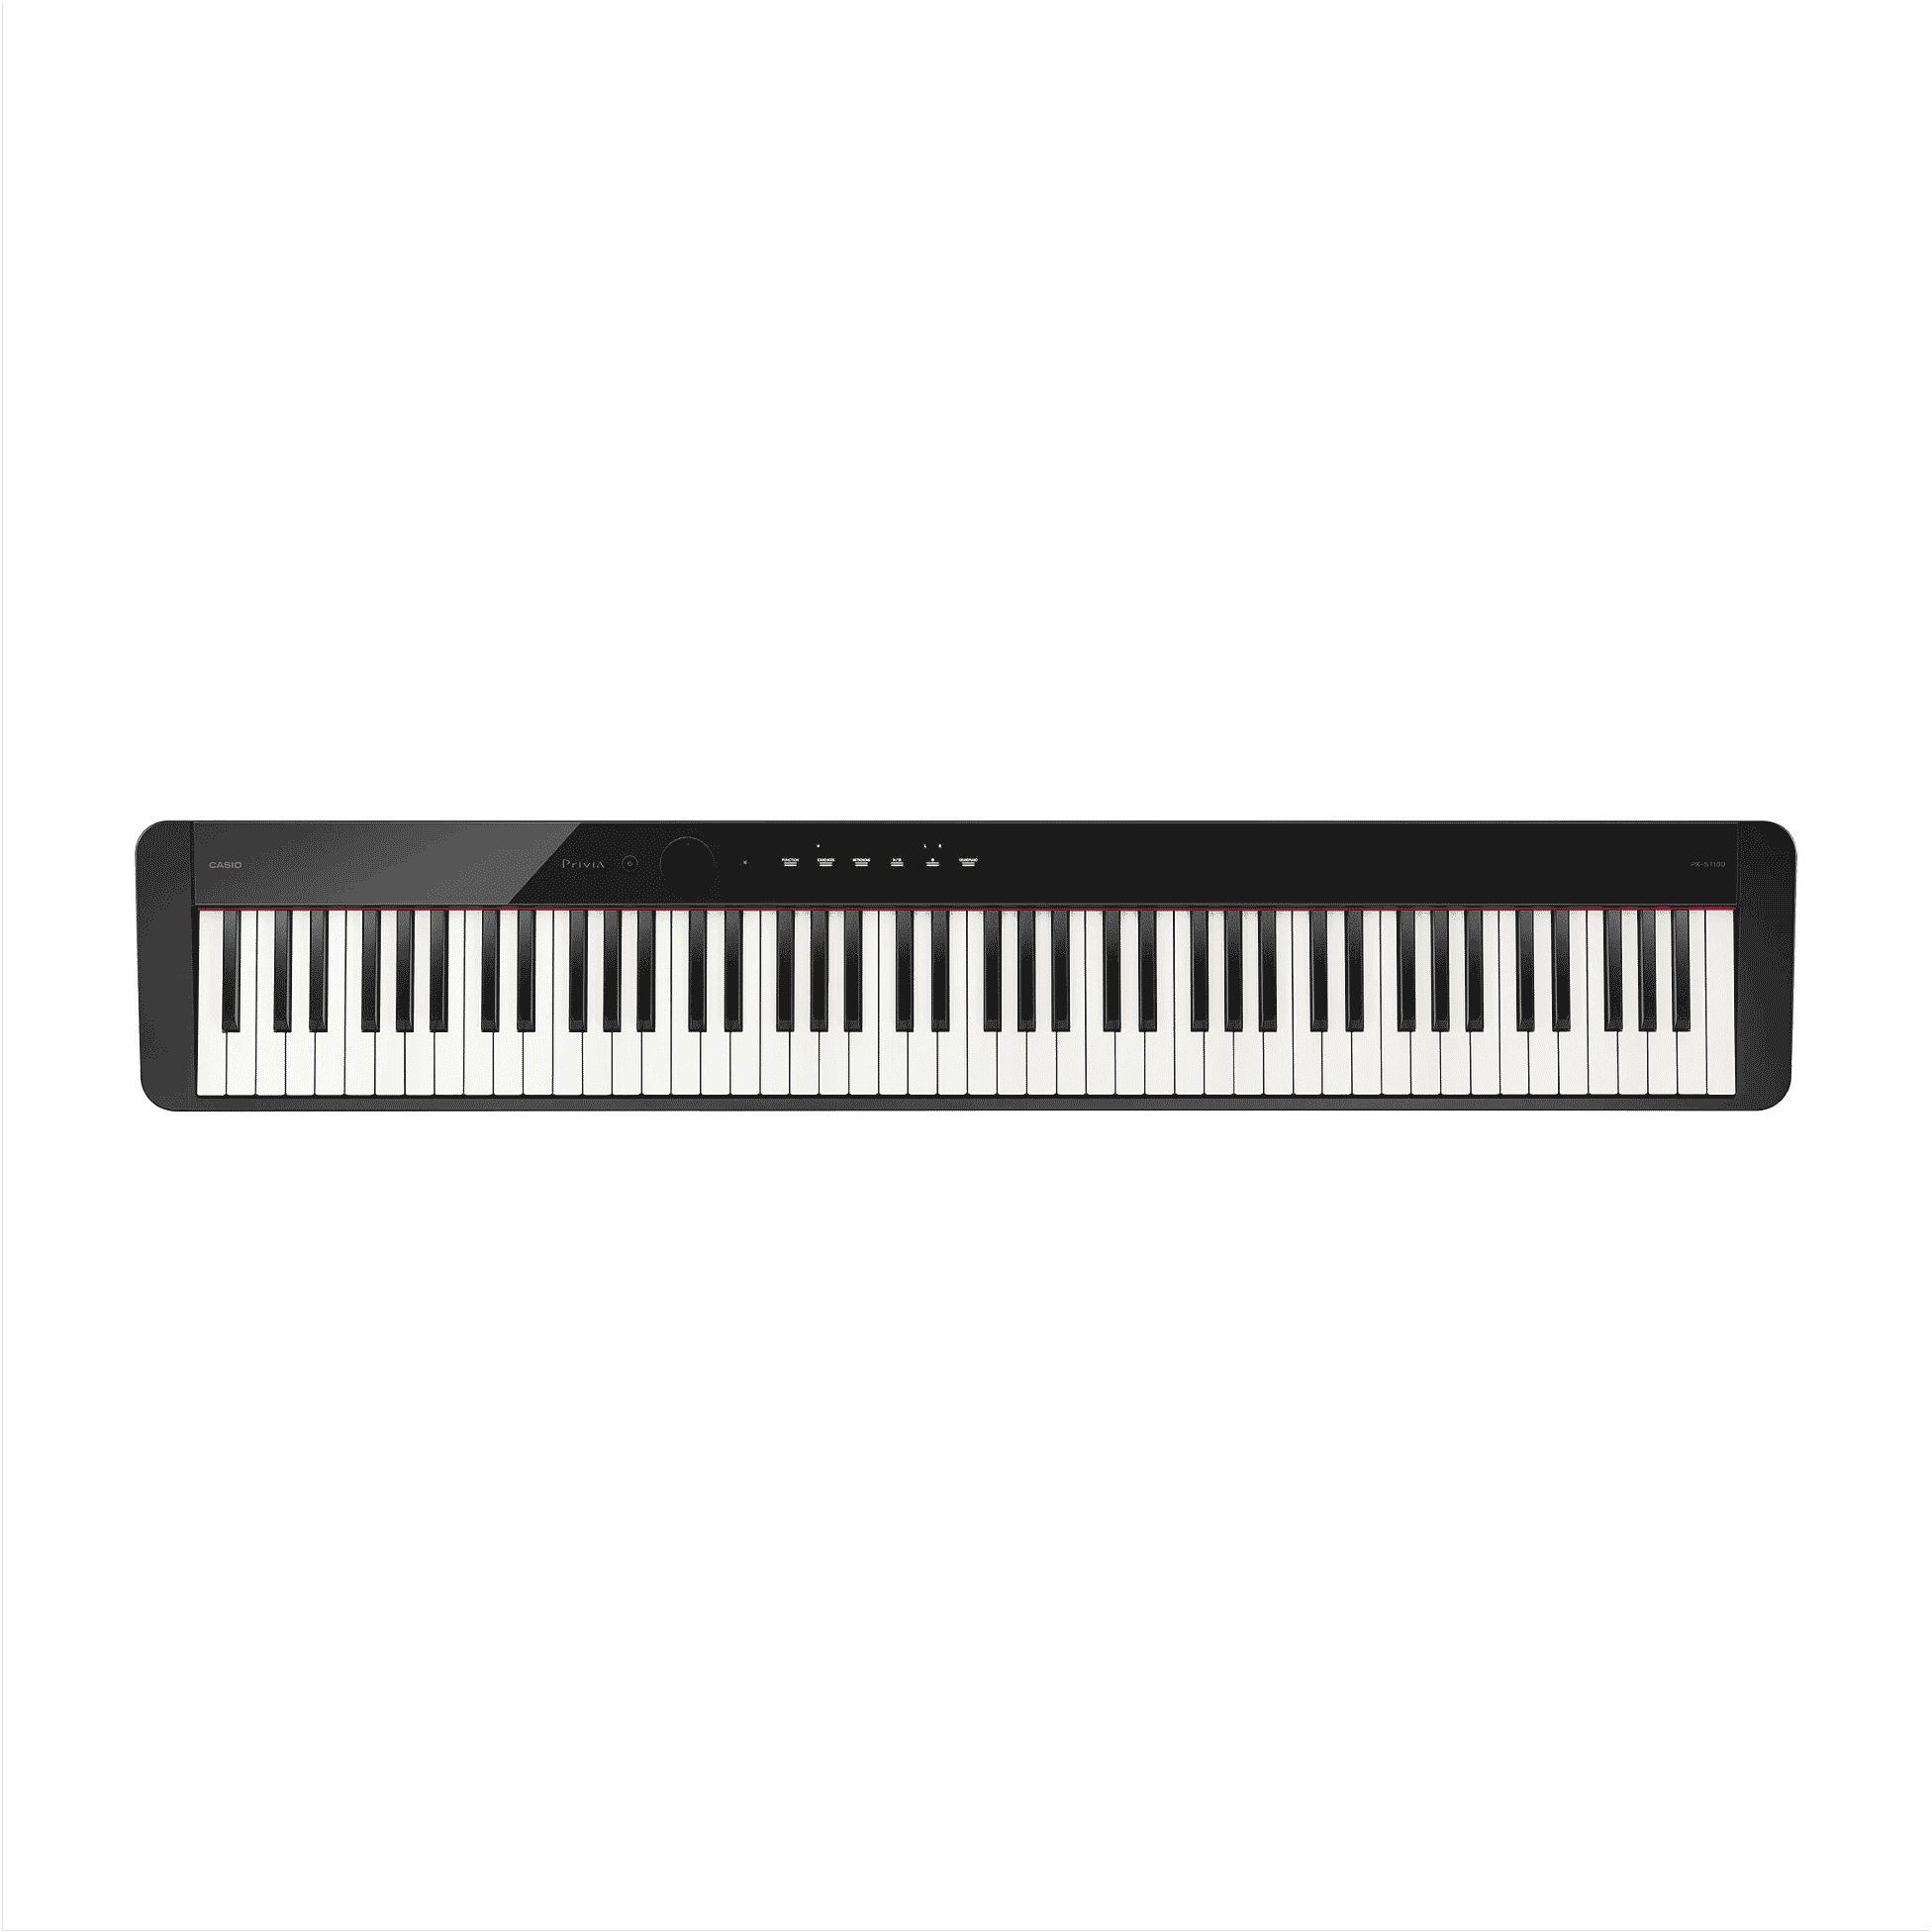 img src="/leje-lyd" alt="Leje lyd: Casio Privia PX-S1100 Digital Piano"